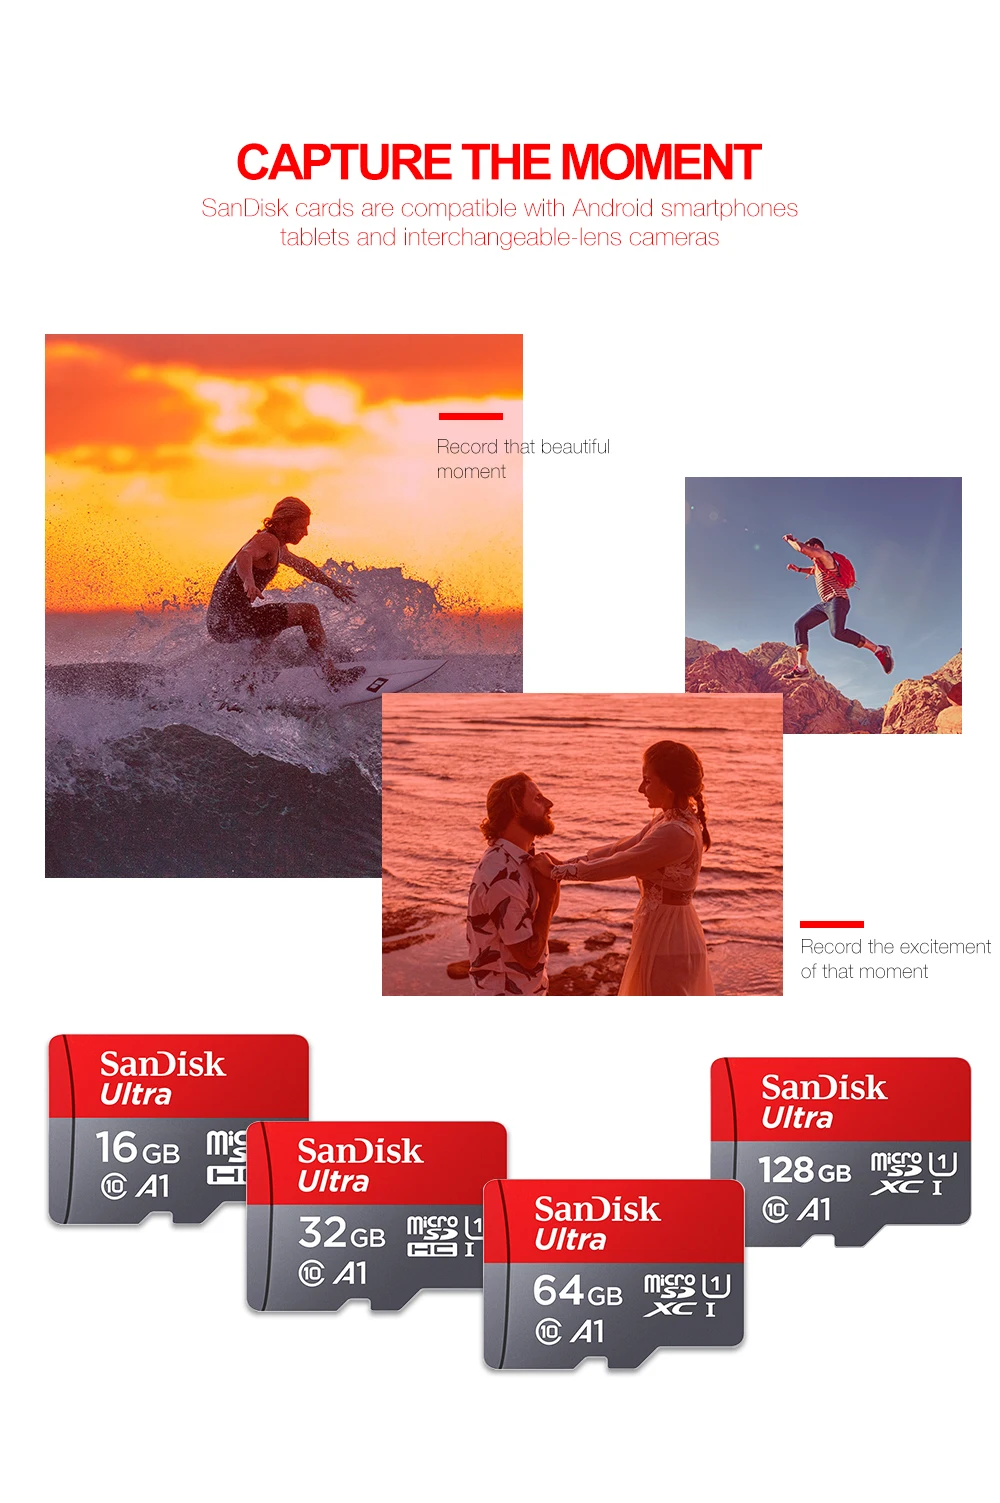 Подарочный адаптер SanDisk Micro sd карта 16 ГБ 32 ГБ 64 Гб 128 Гб MicroSDHC карта памяти класс 10 TF карта для смартфонов/планшетов/ПК